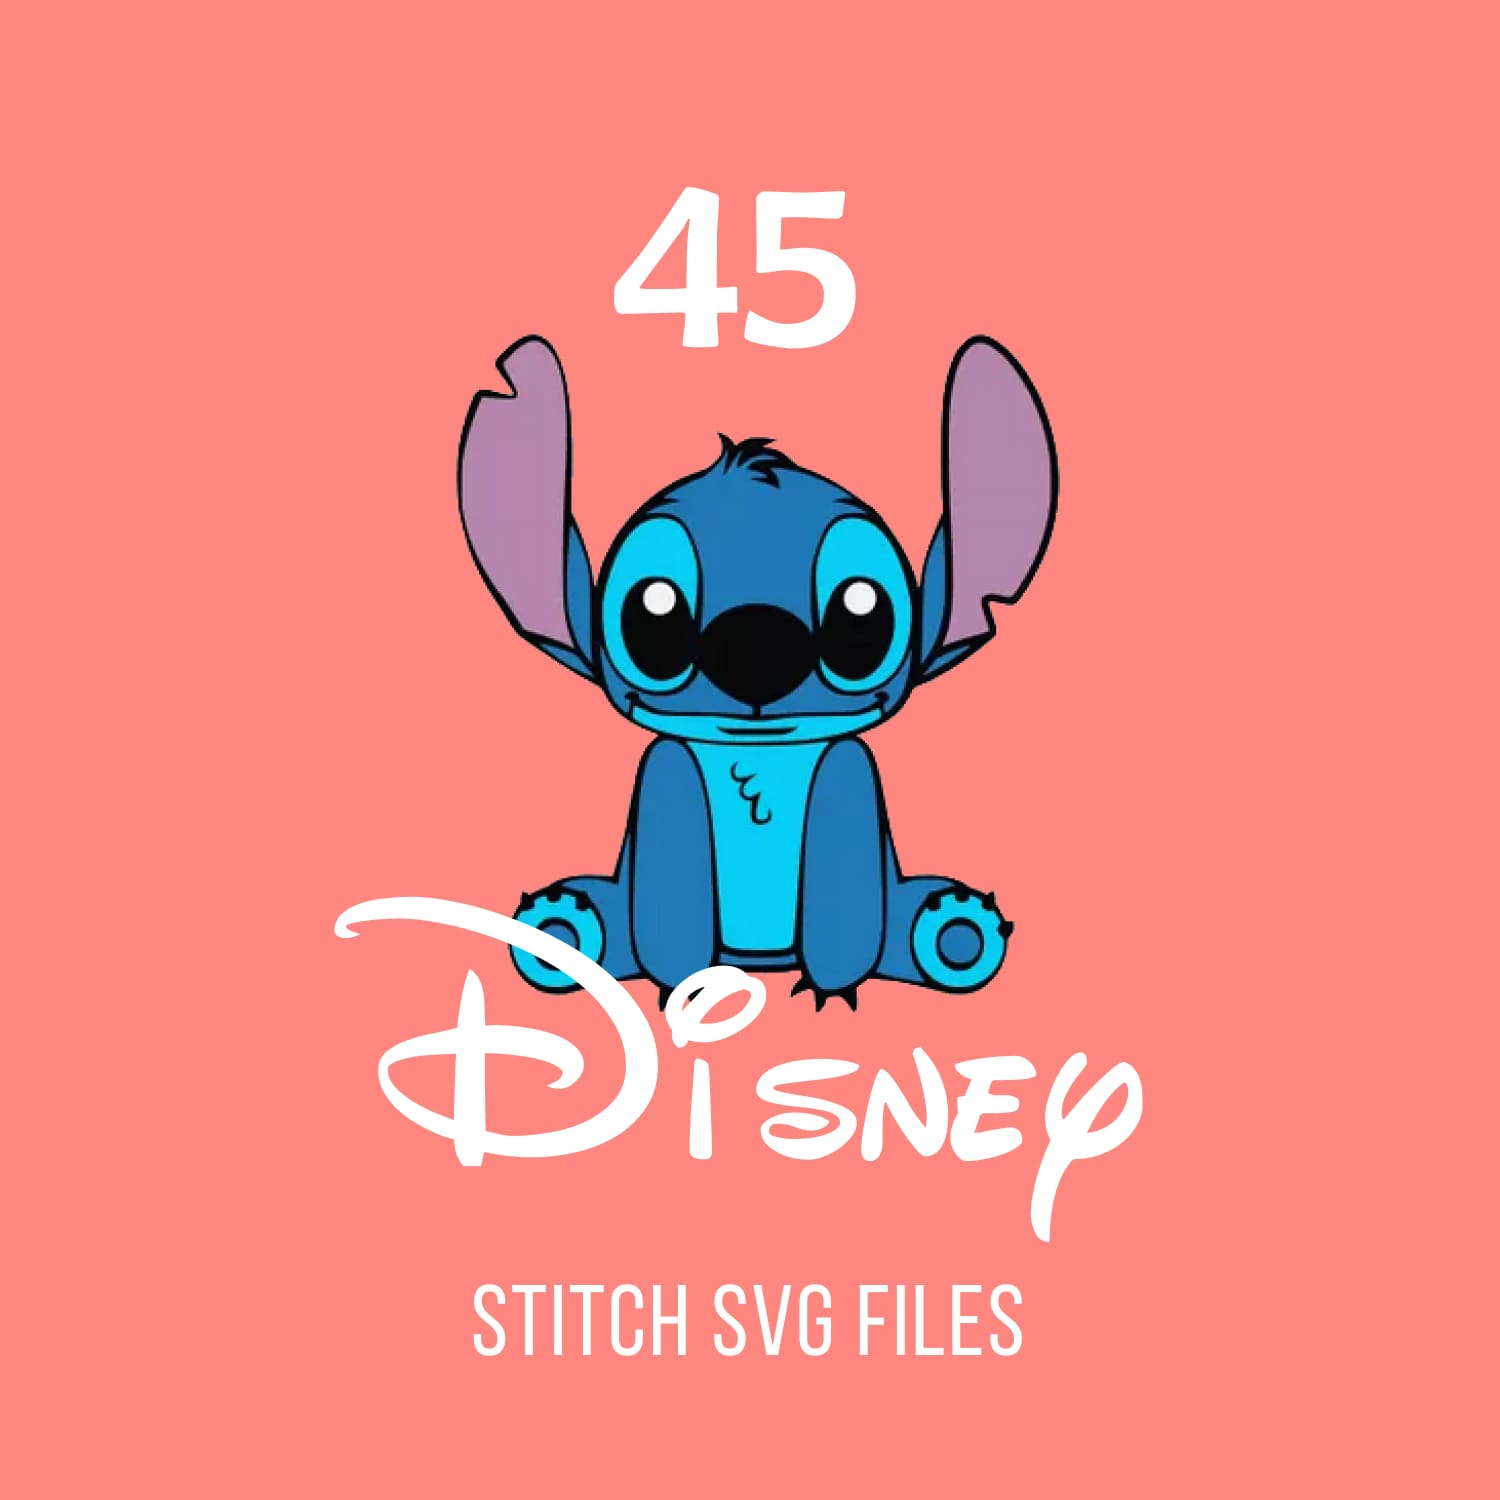 Stitch SVG Files 1.